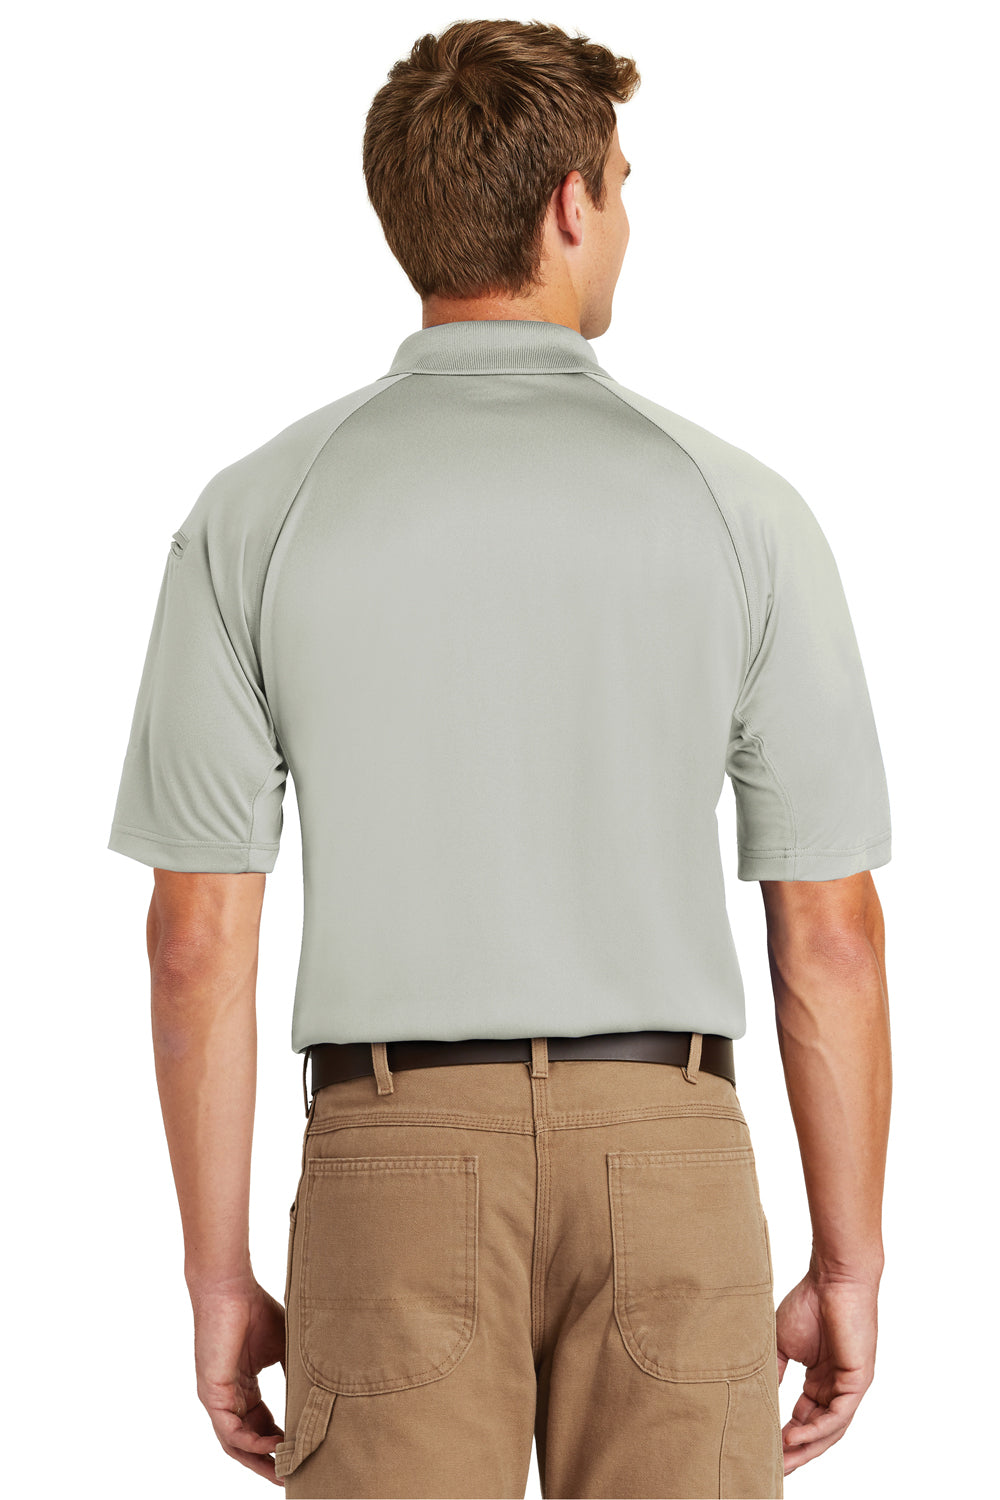 CornerStone CS410 Mens Select Tactical Moisture Wicking Short Sleeve Polo Shirt Light Grey Back